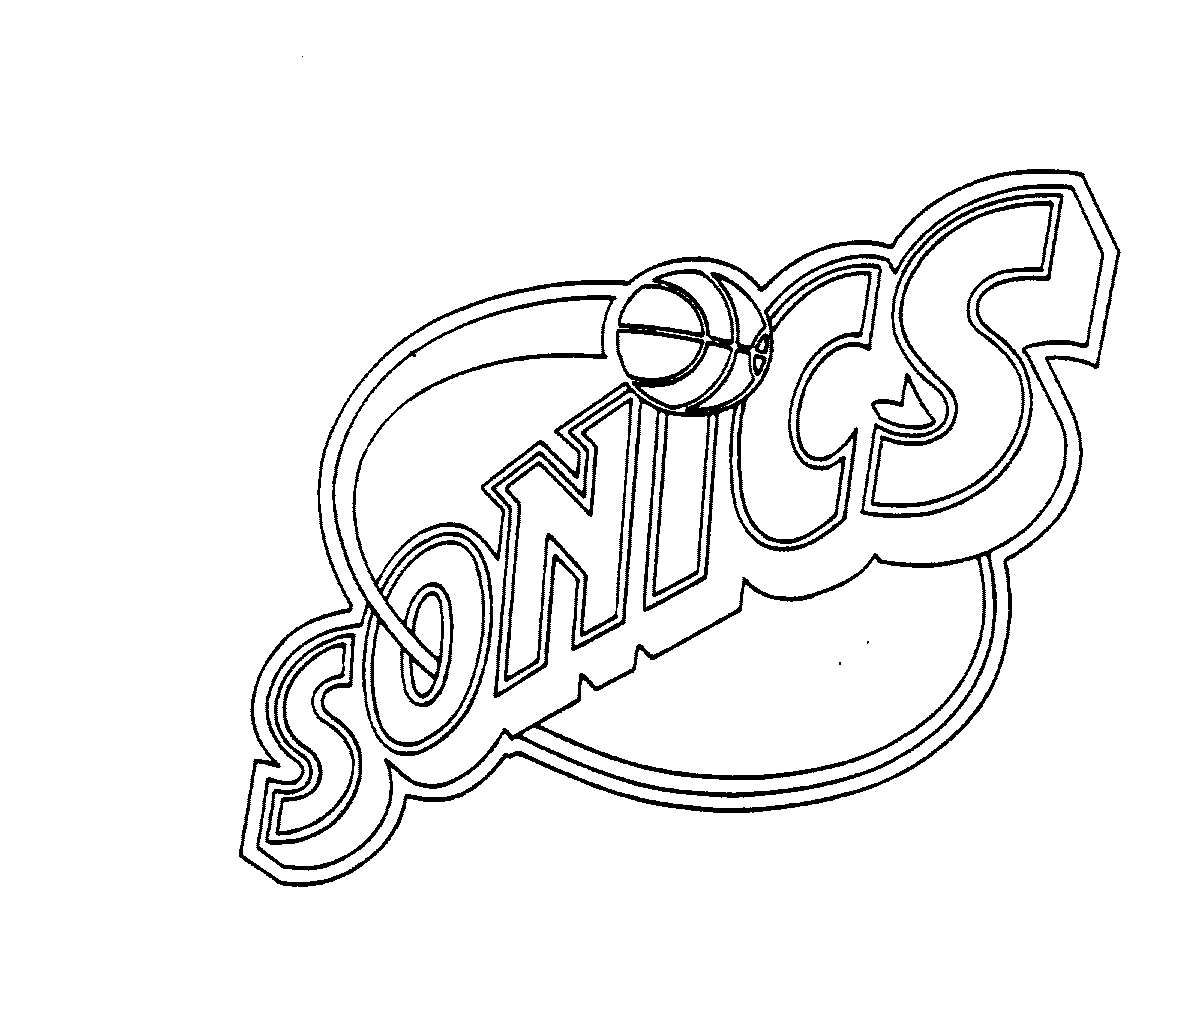 SONICS